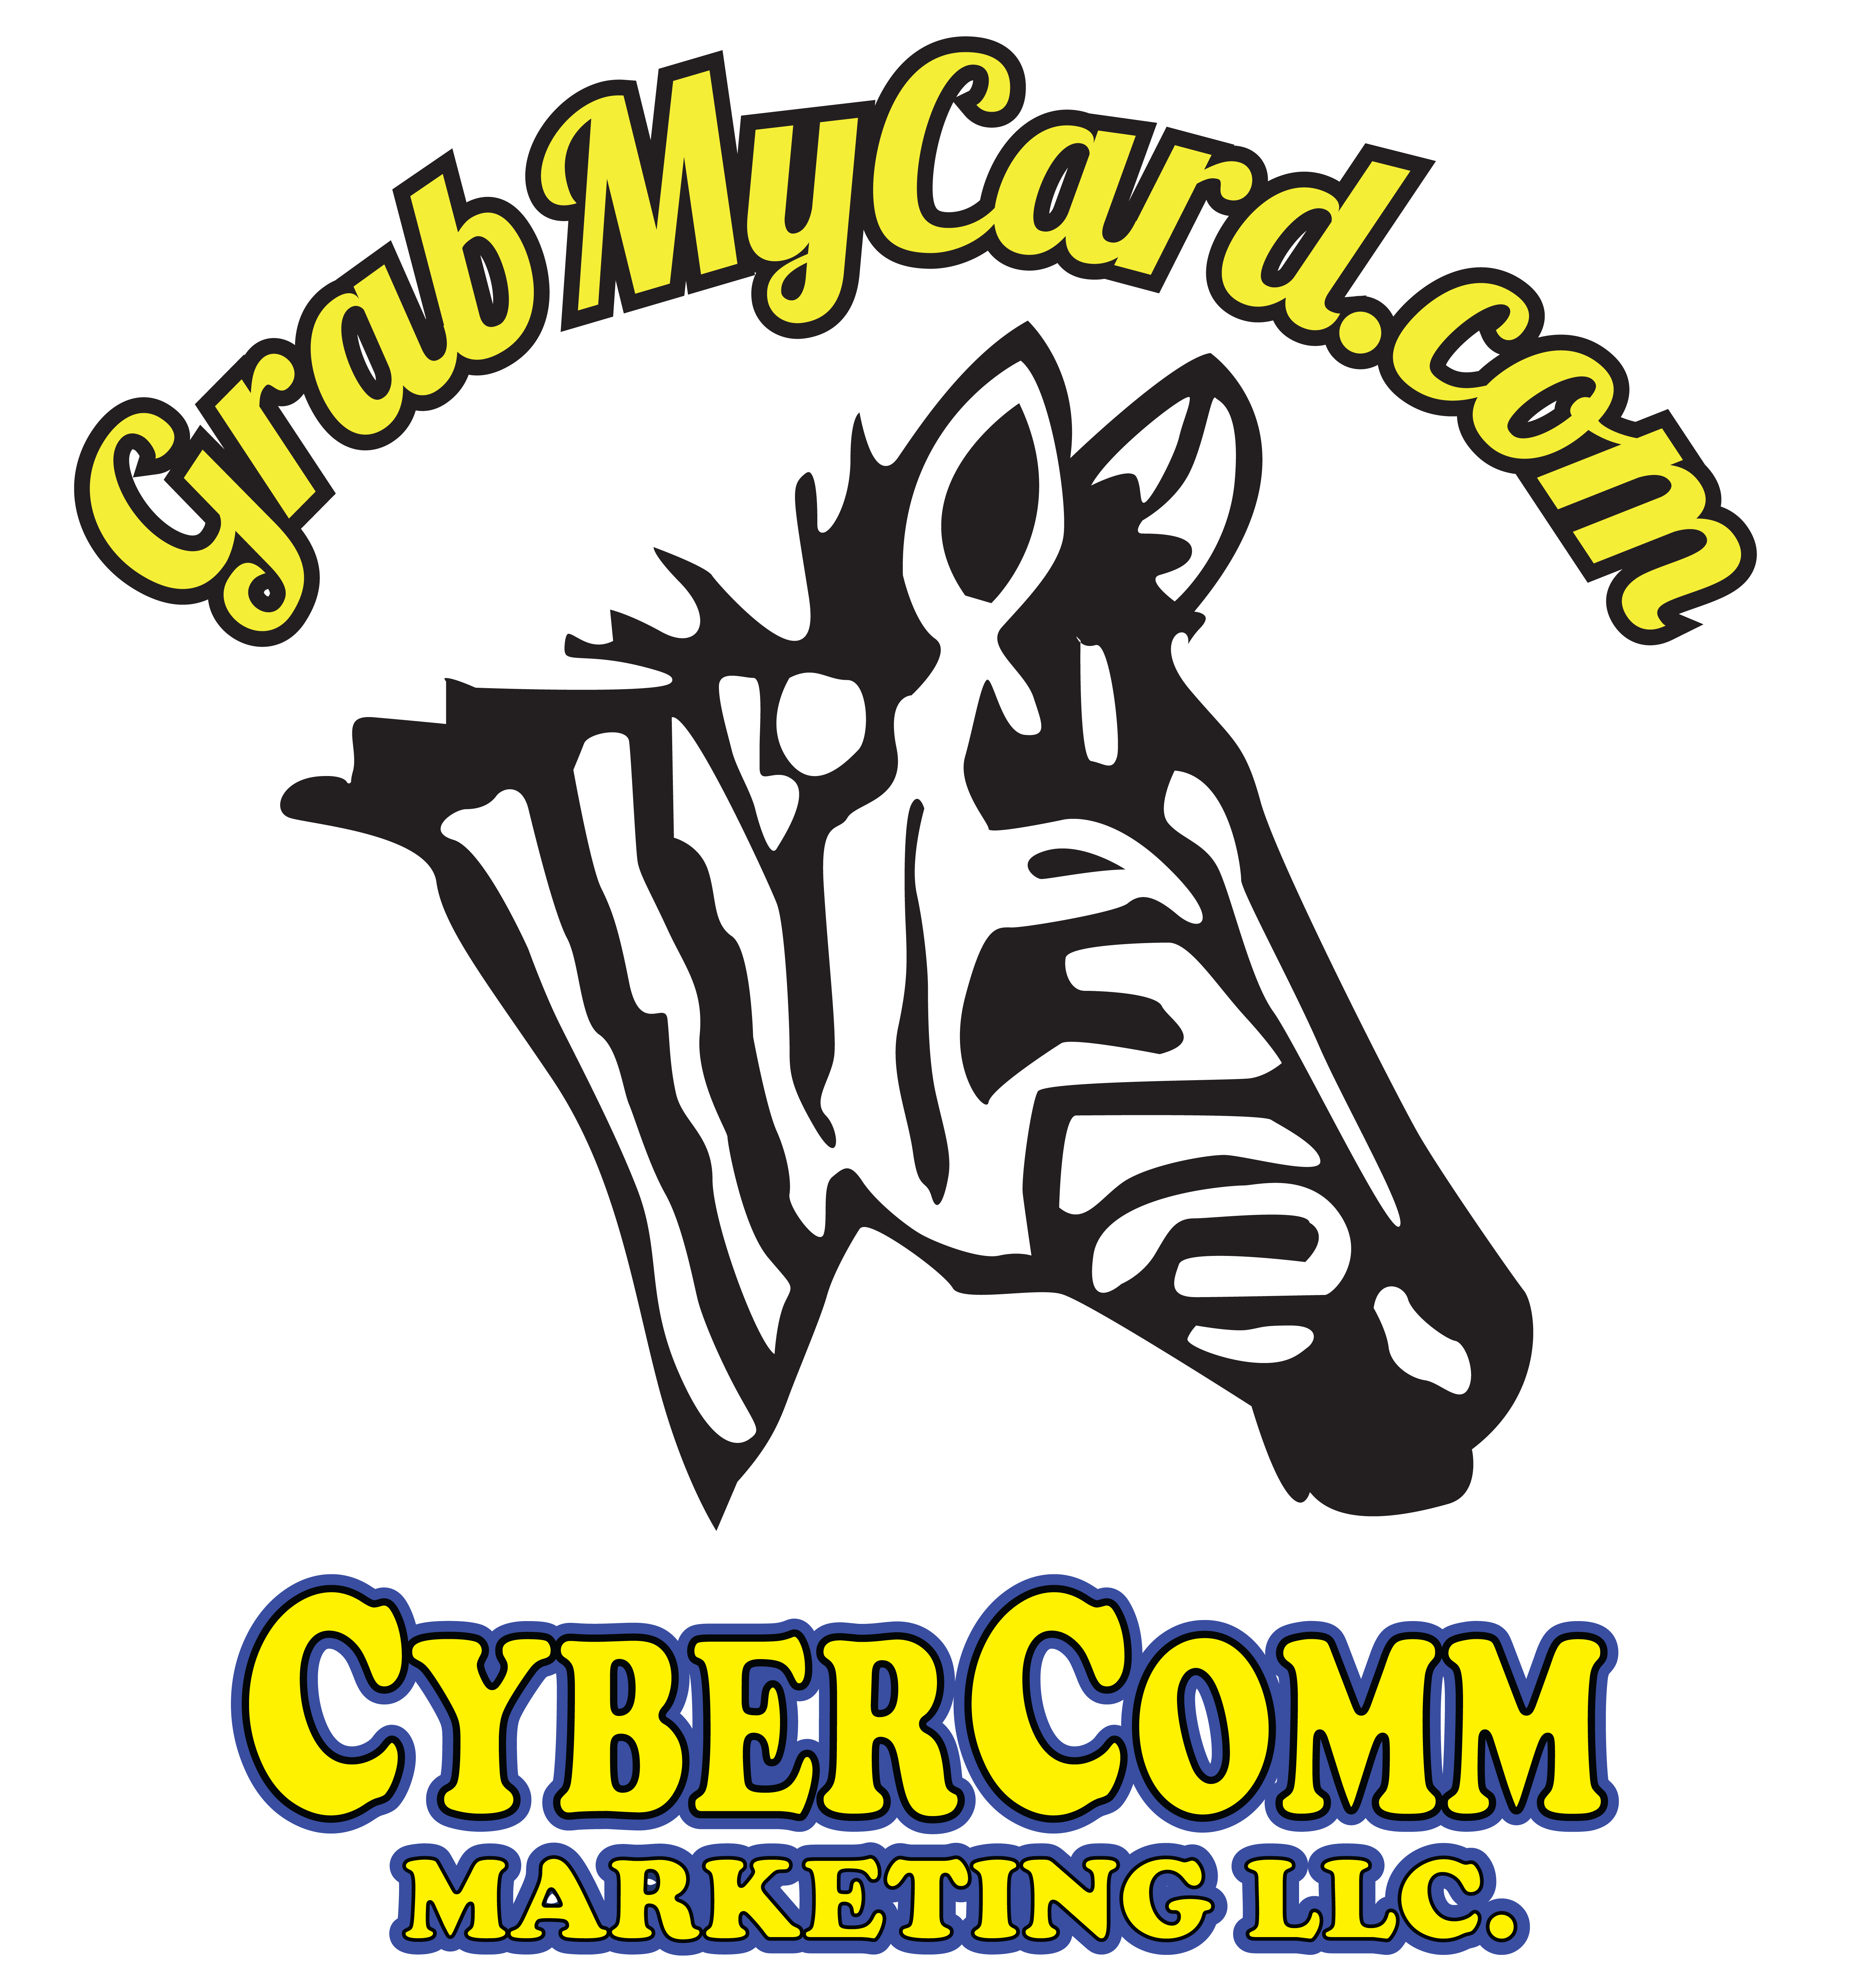 Pat Waggeners business card from CyberComm Marketing, LLC